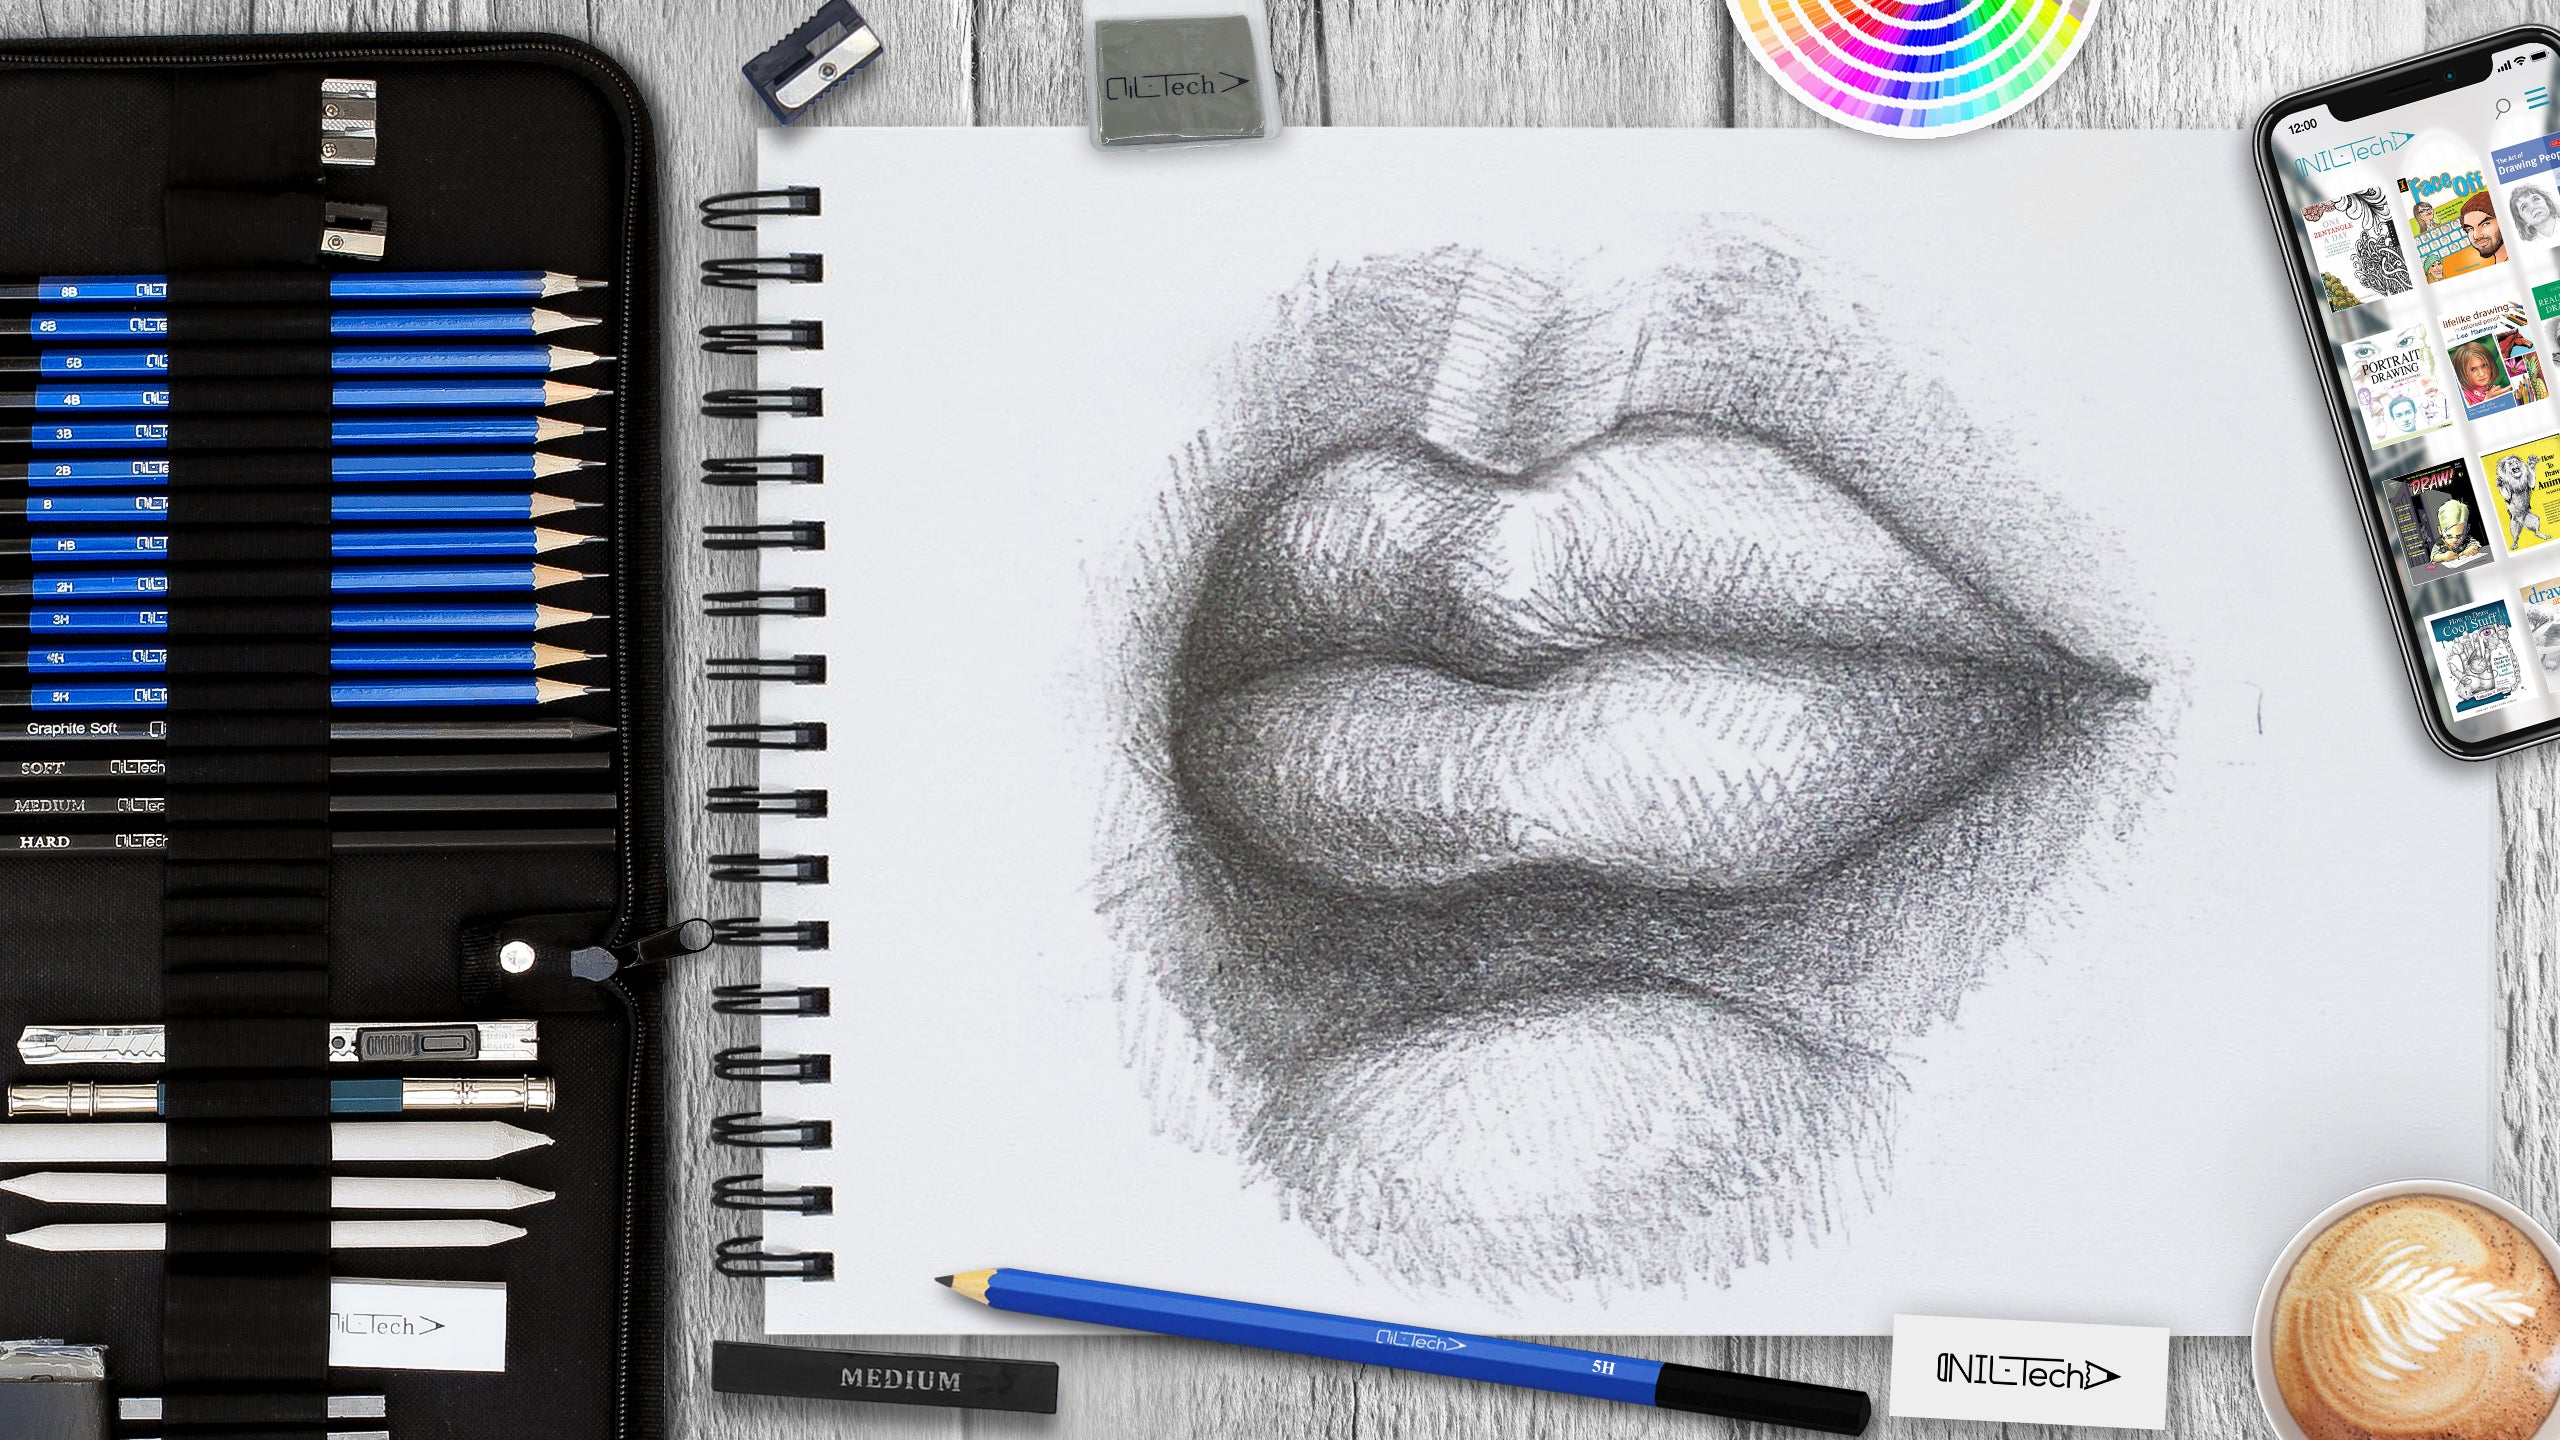 Draw with kamal on LinkedIn: #drawing #sketch #lips #lipsdrawing